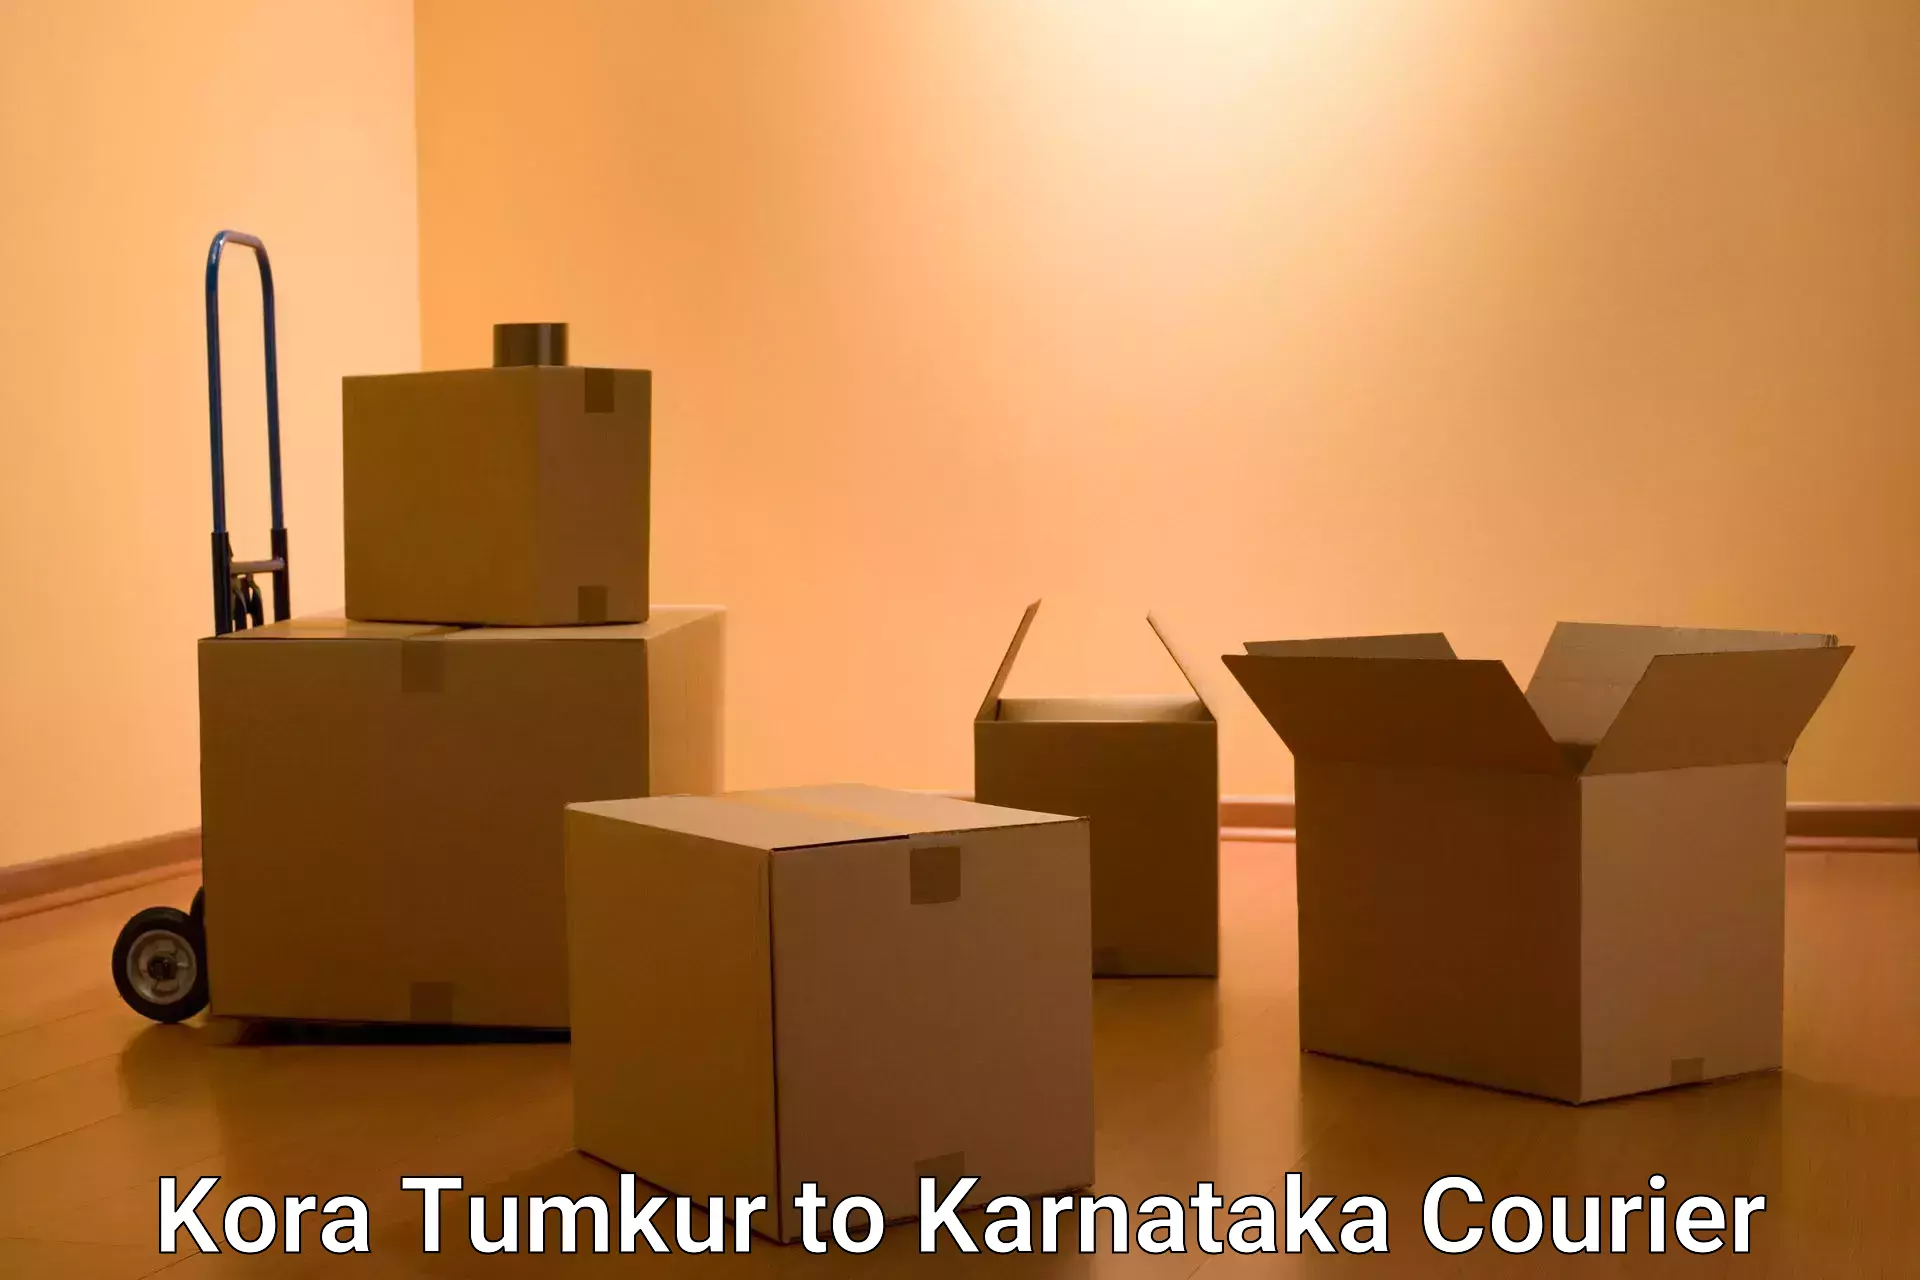 Cargo delivery service Kora Tumkur to Karnataka